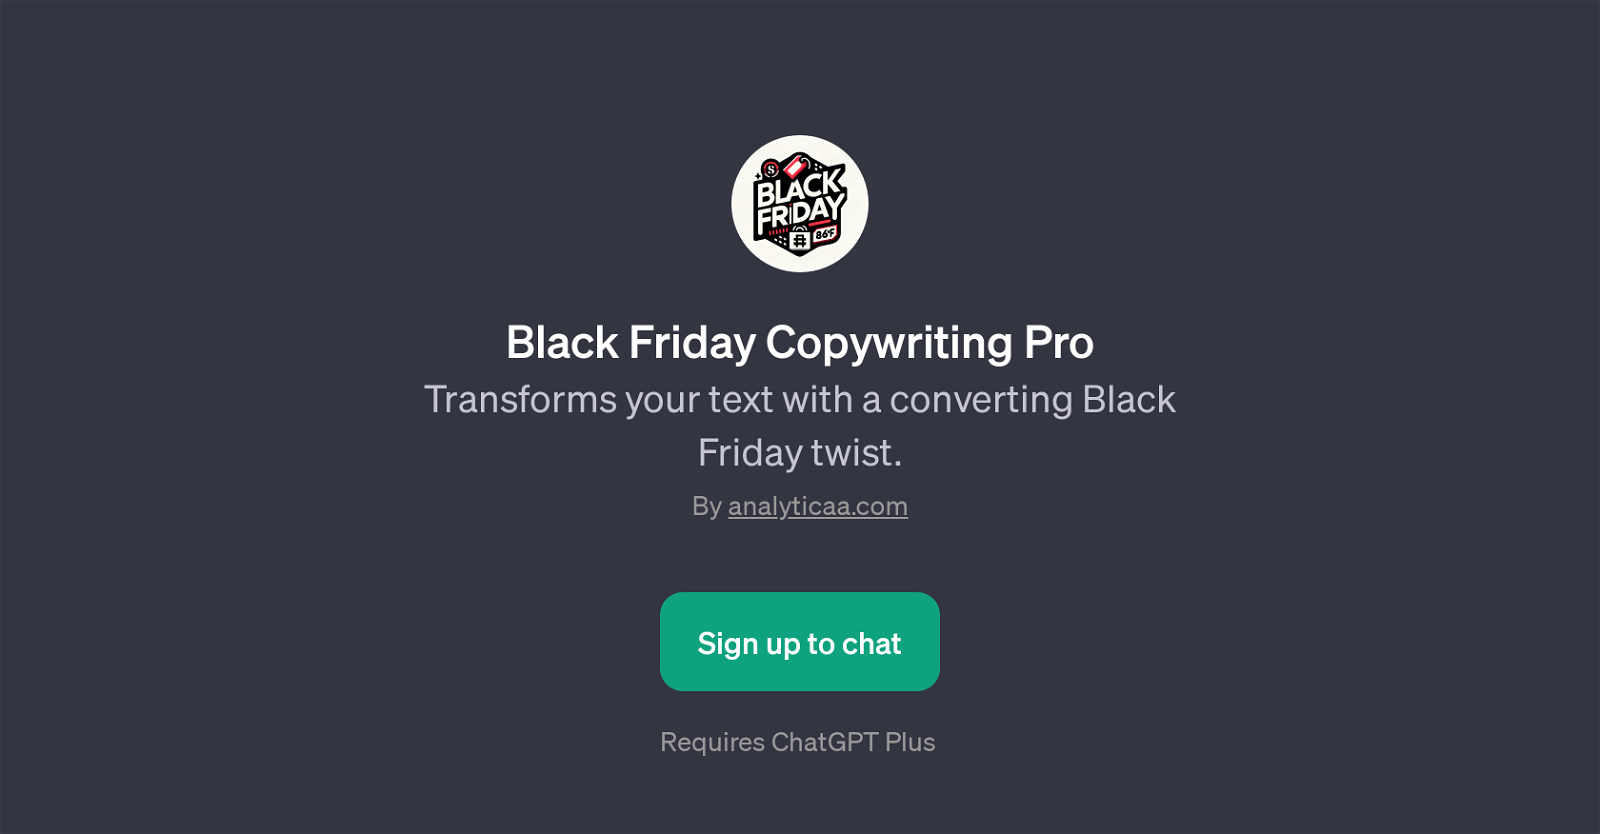 Black Friday Copywriting Pro website